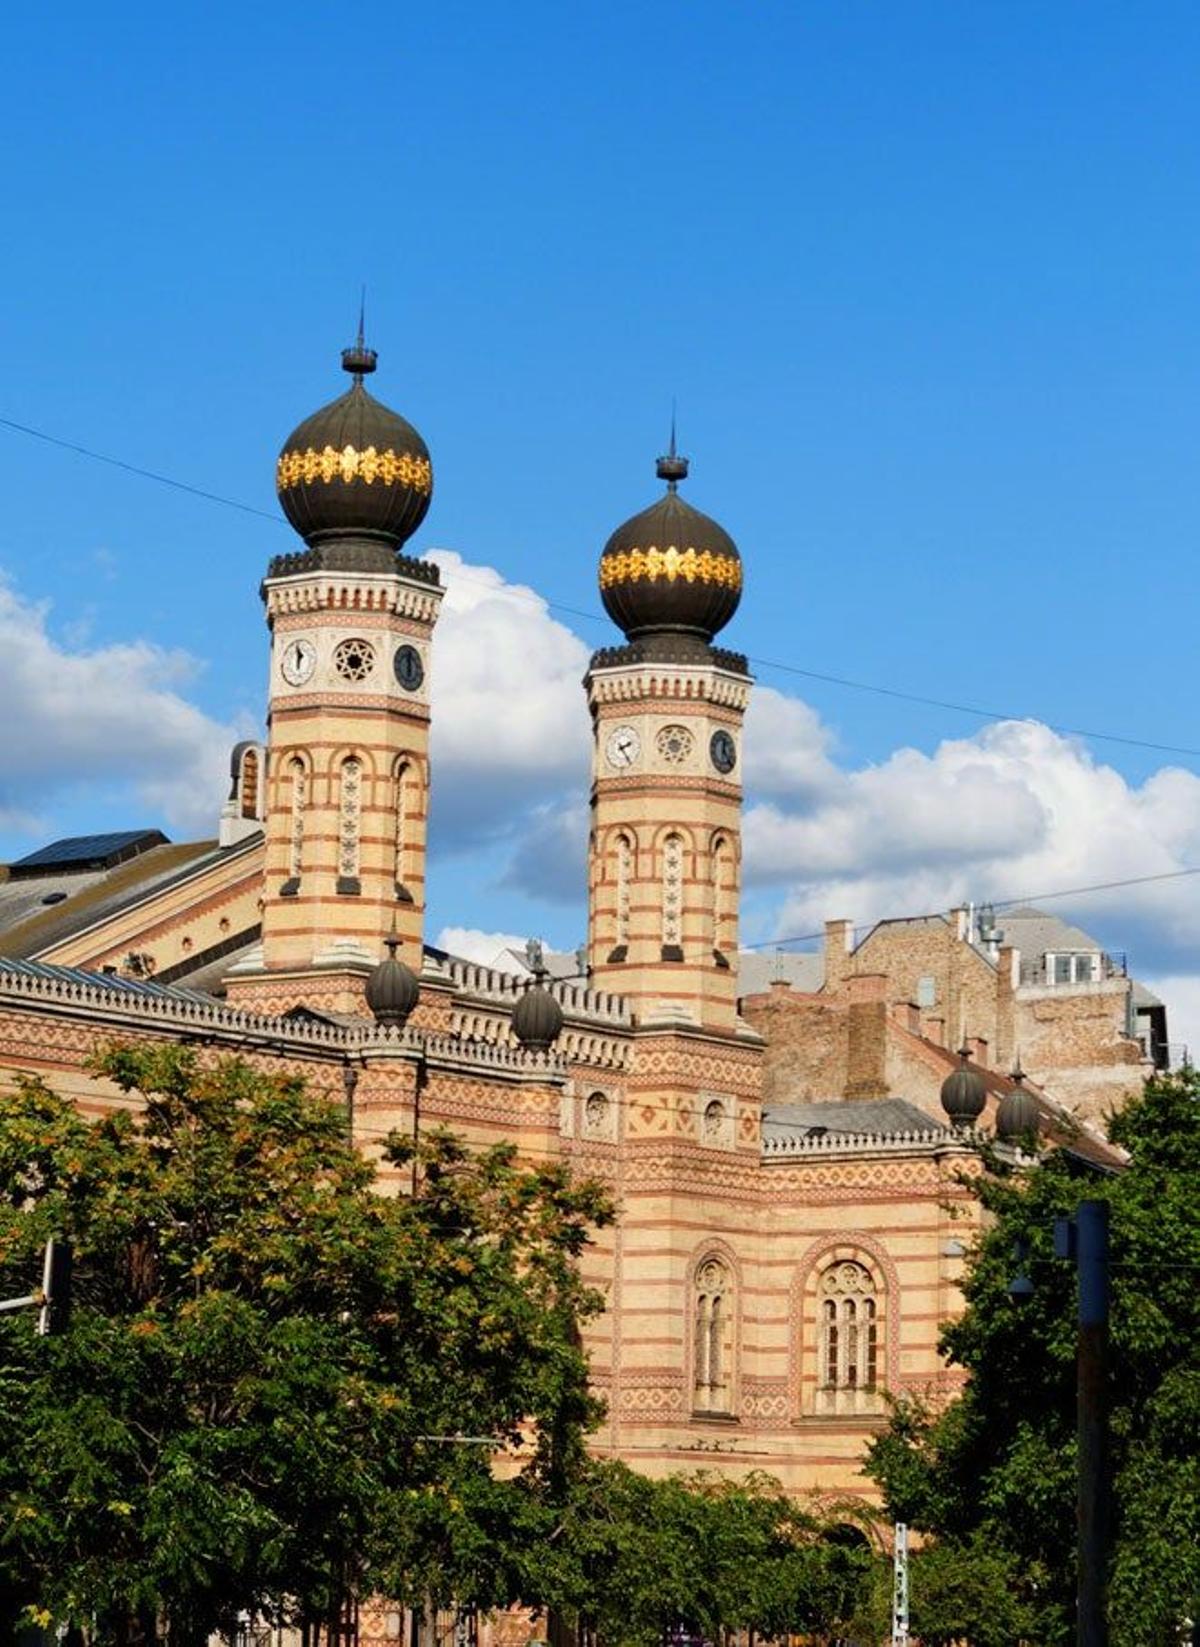 La Gran Sinagoga de Budapest